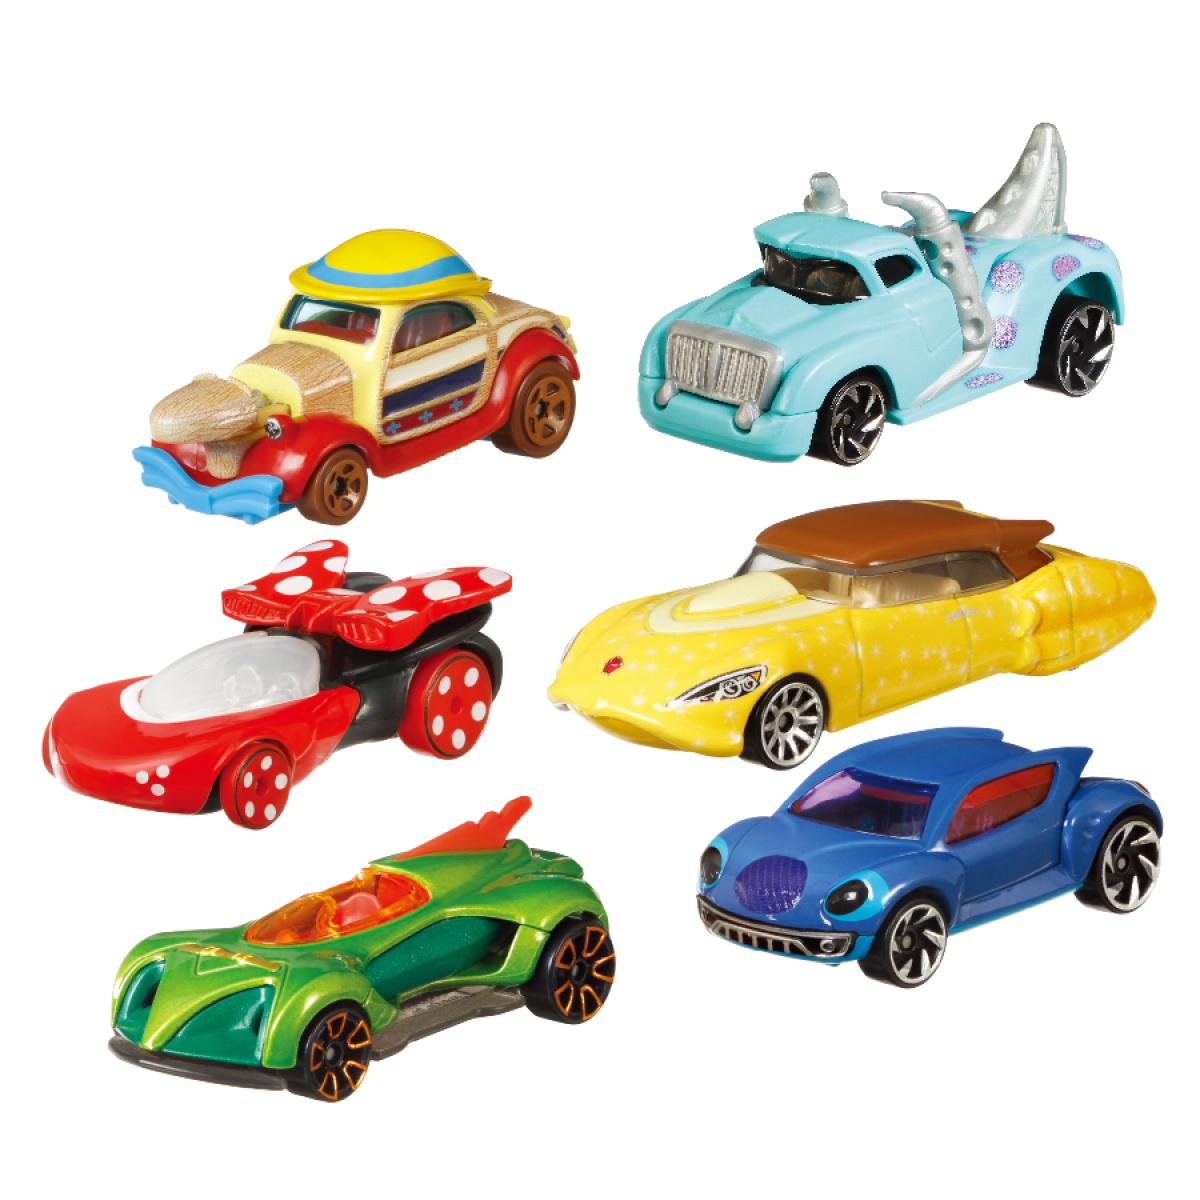 GCK28 Hot Wheels Character Cars Collection Disney/Pixar ToysChoose